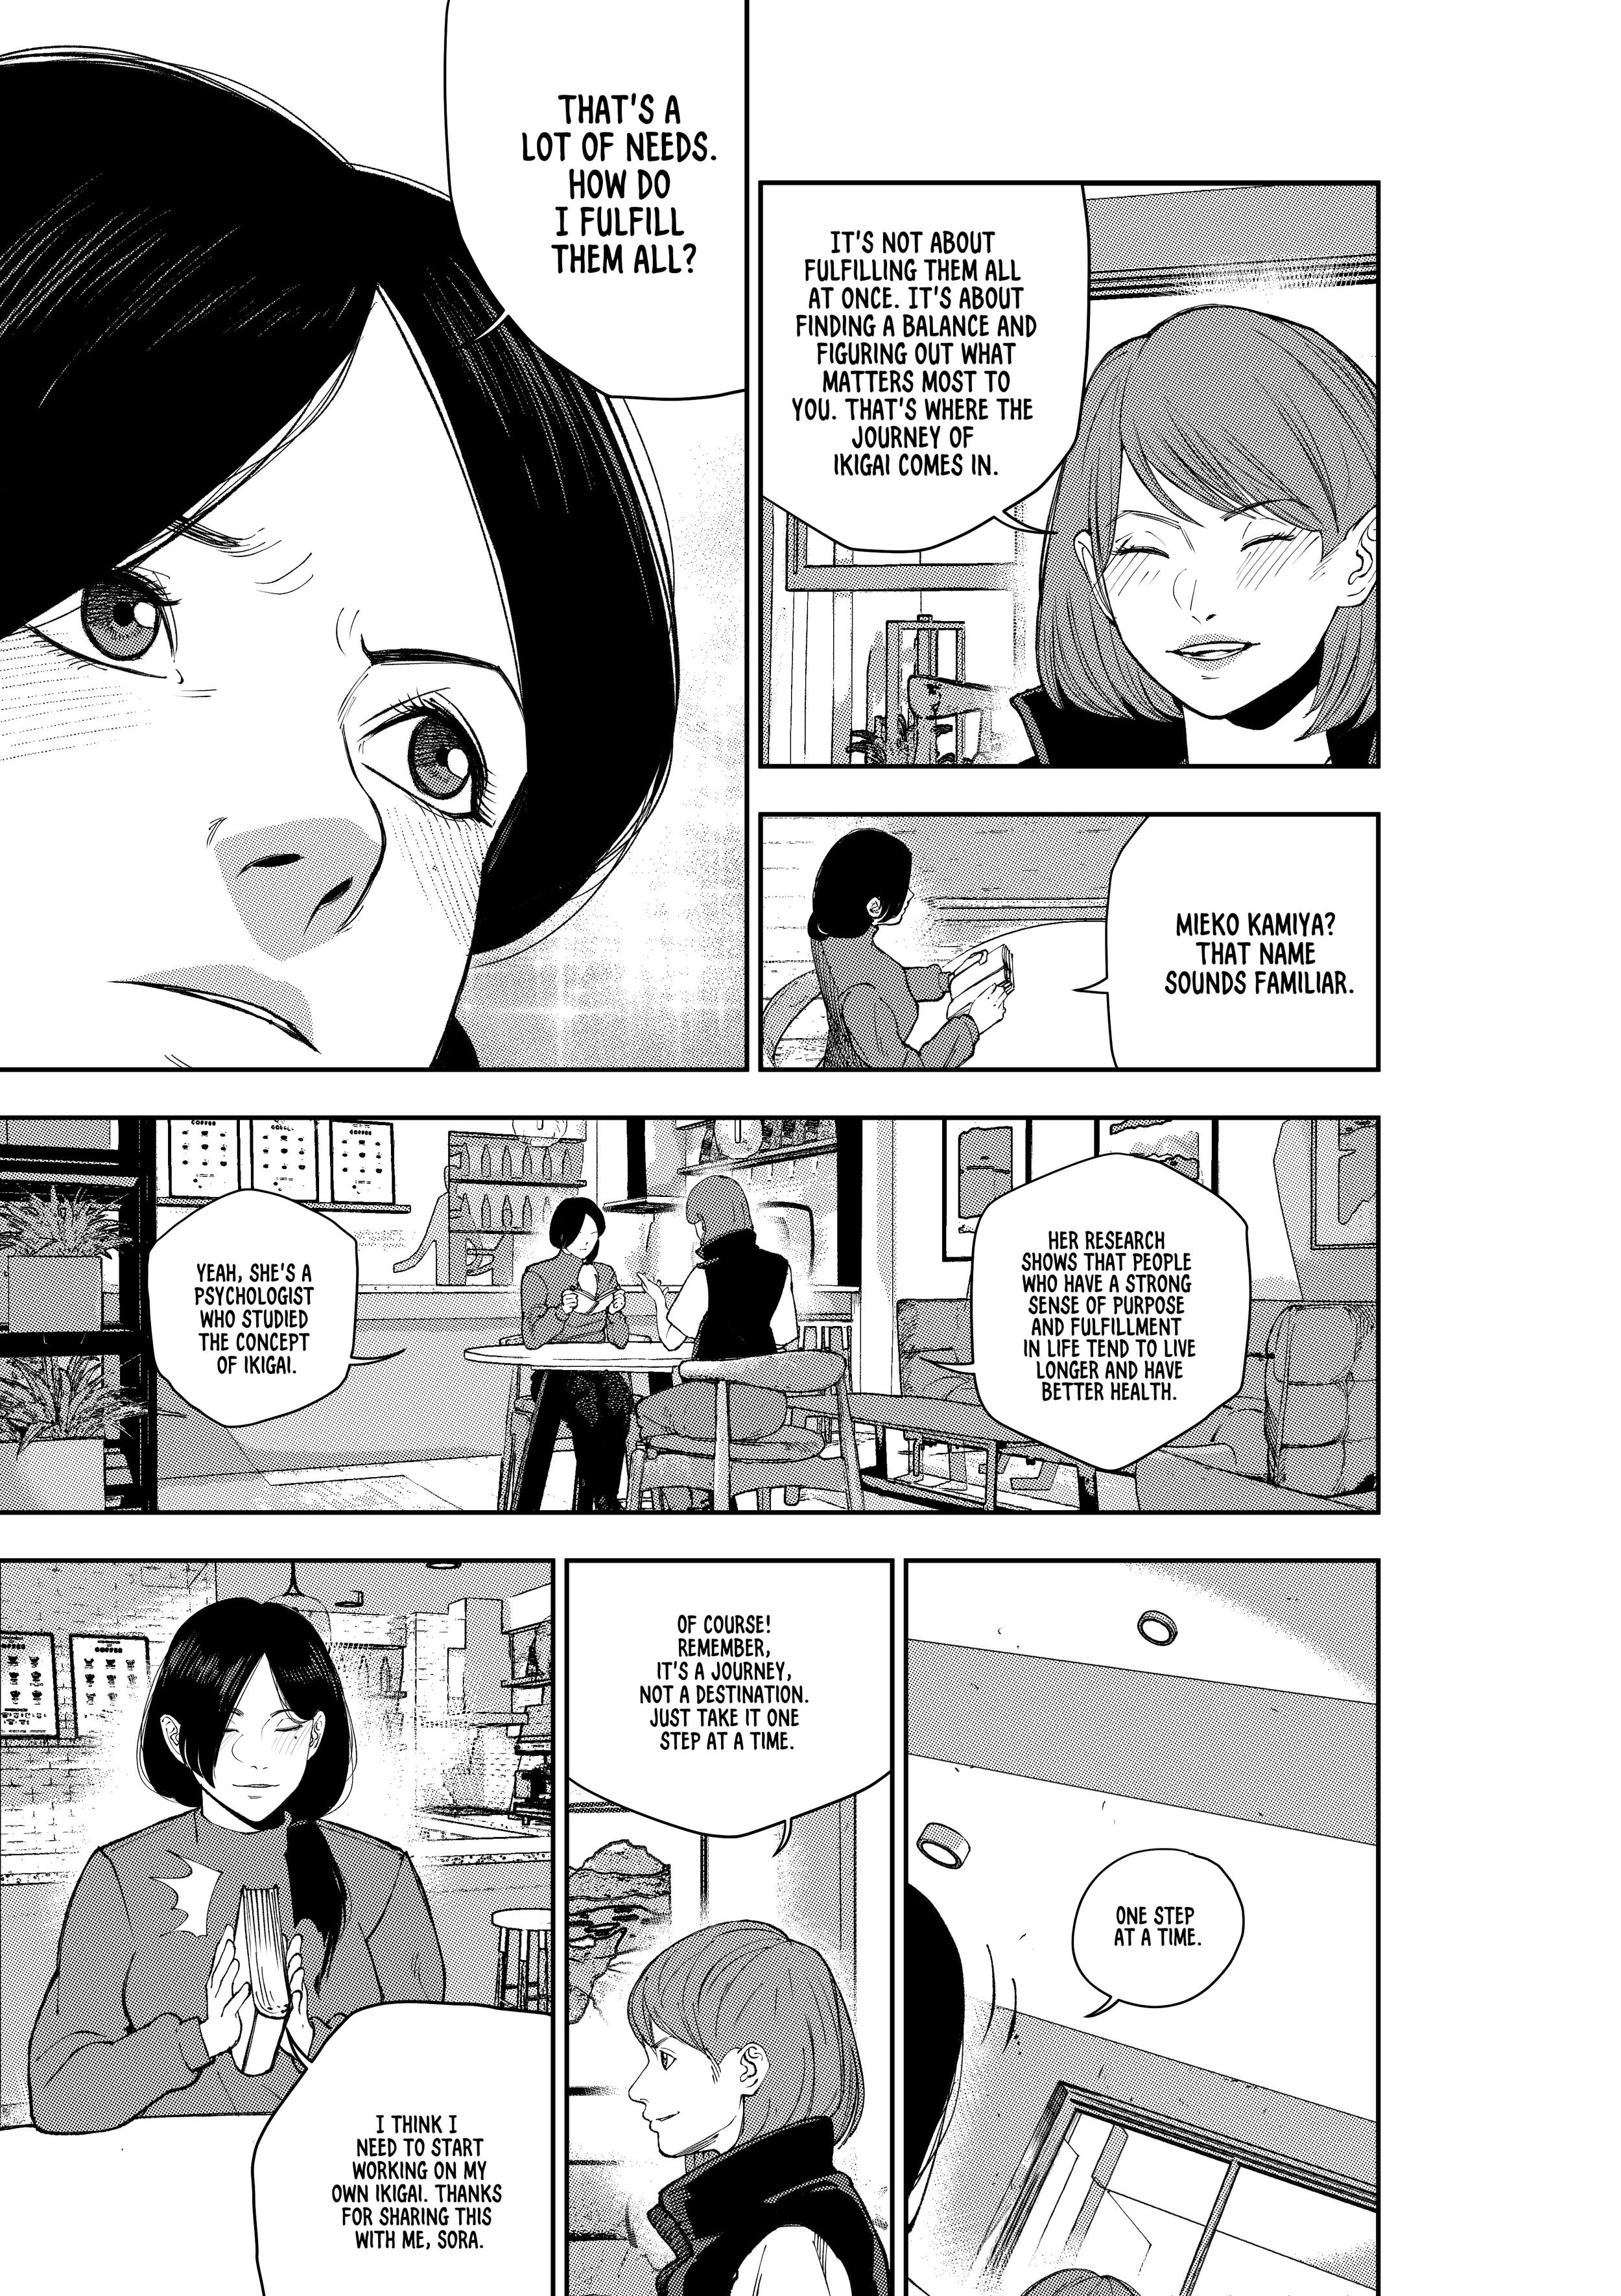 Motoki Ikigai Manga Mieko Kamiya Page 2-min.jpg